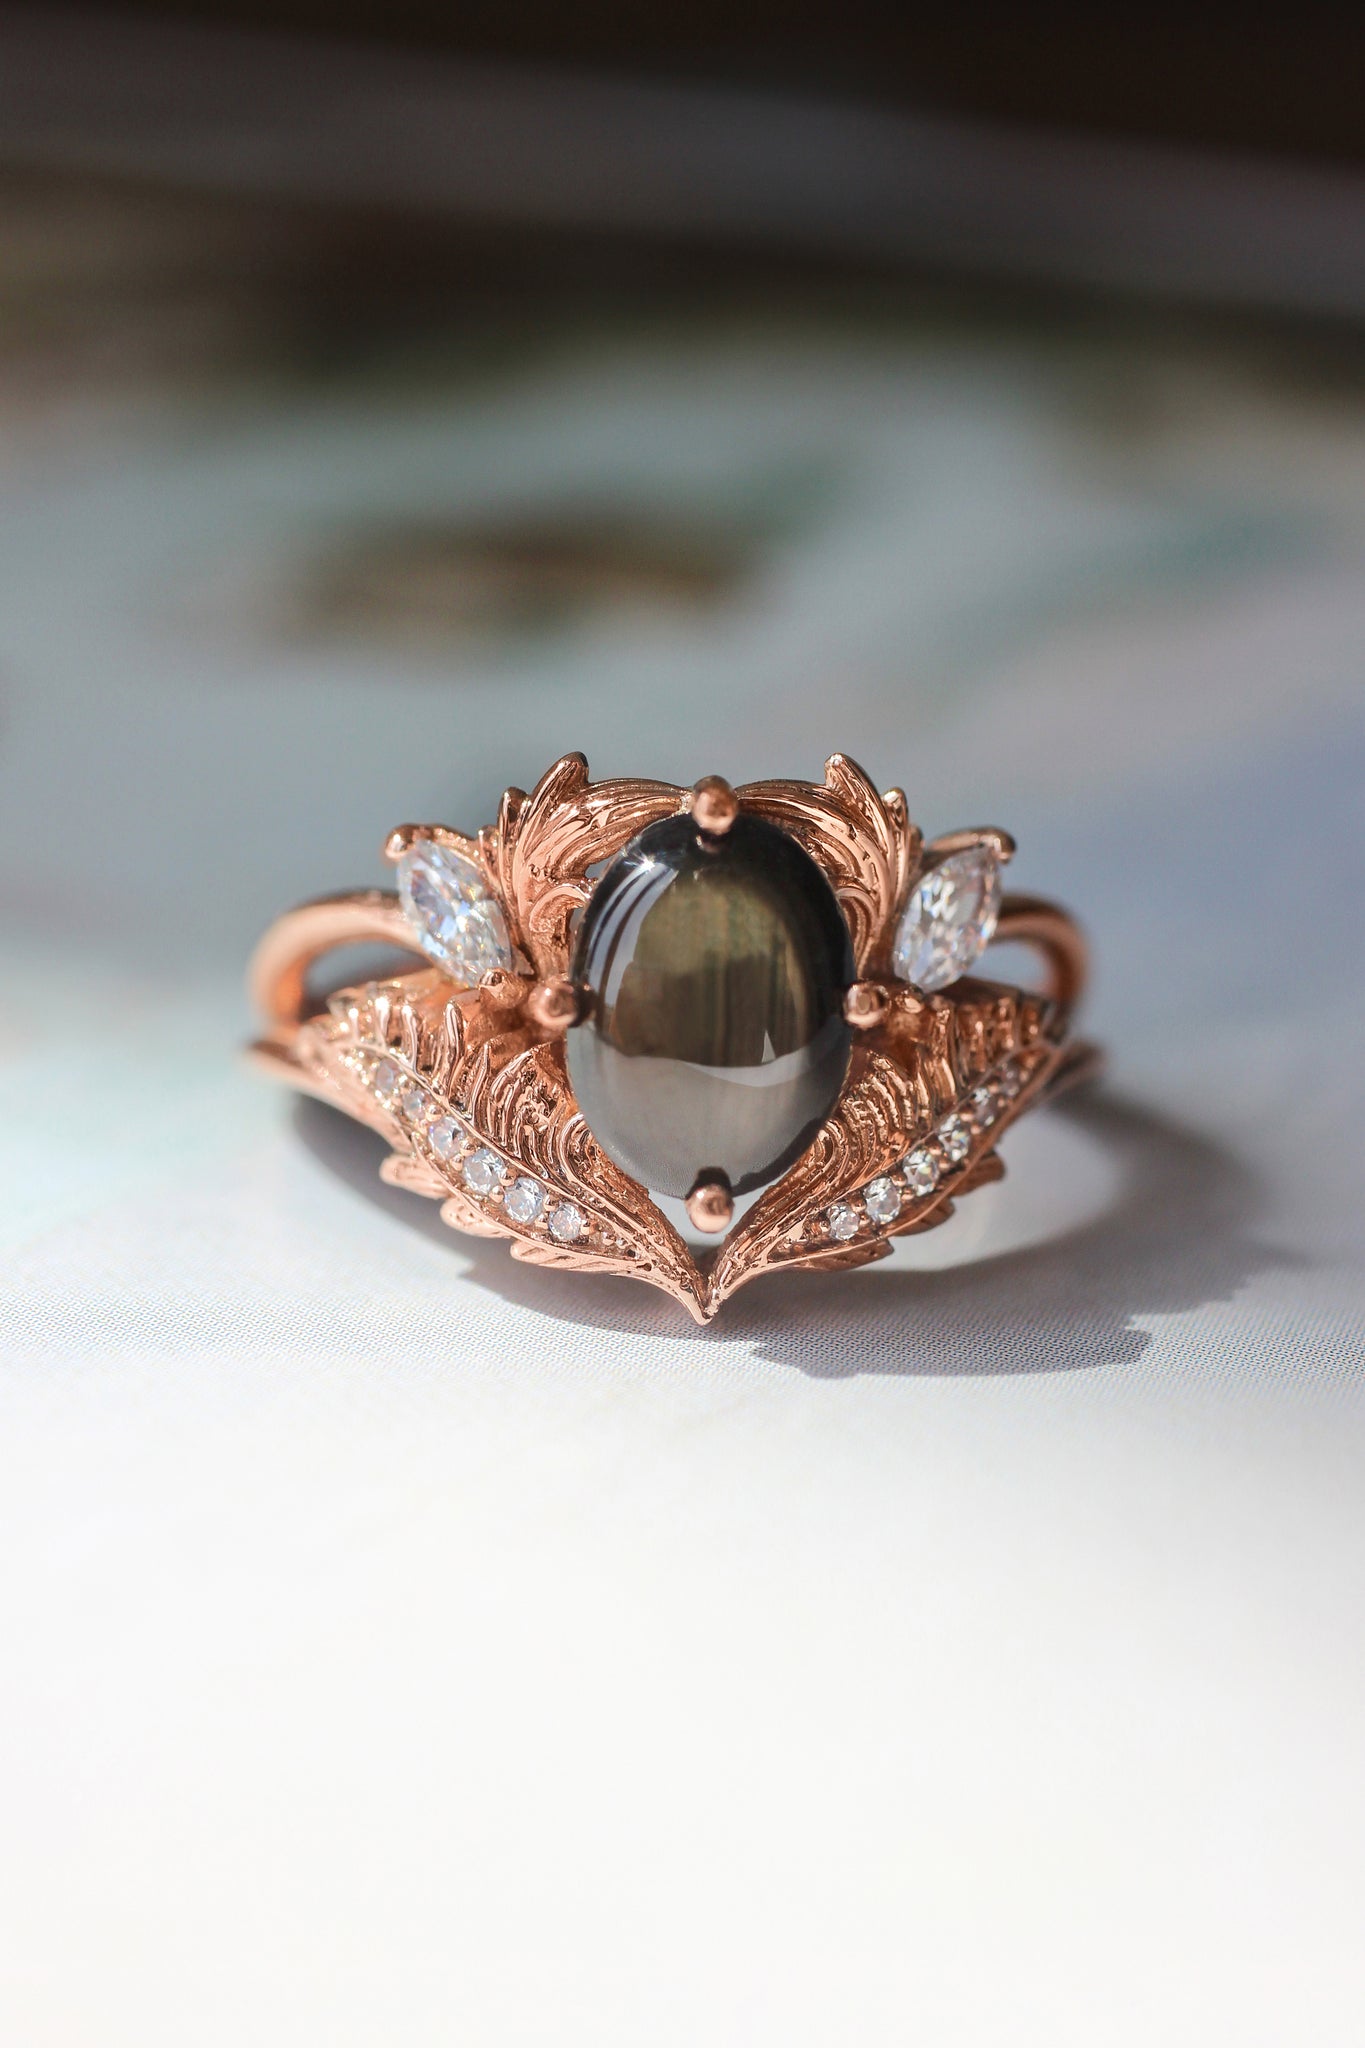 Black star sapphire engagement ring with moissanites / Adonis - Eden Garden Jewelry™